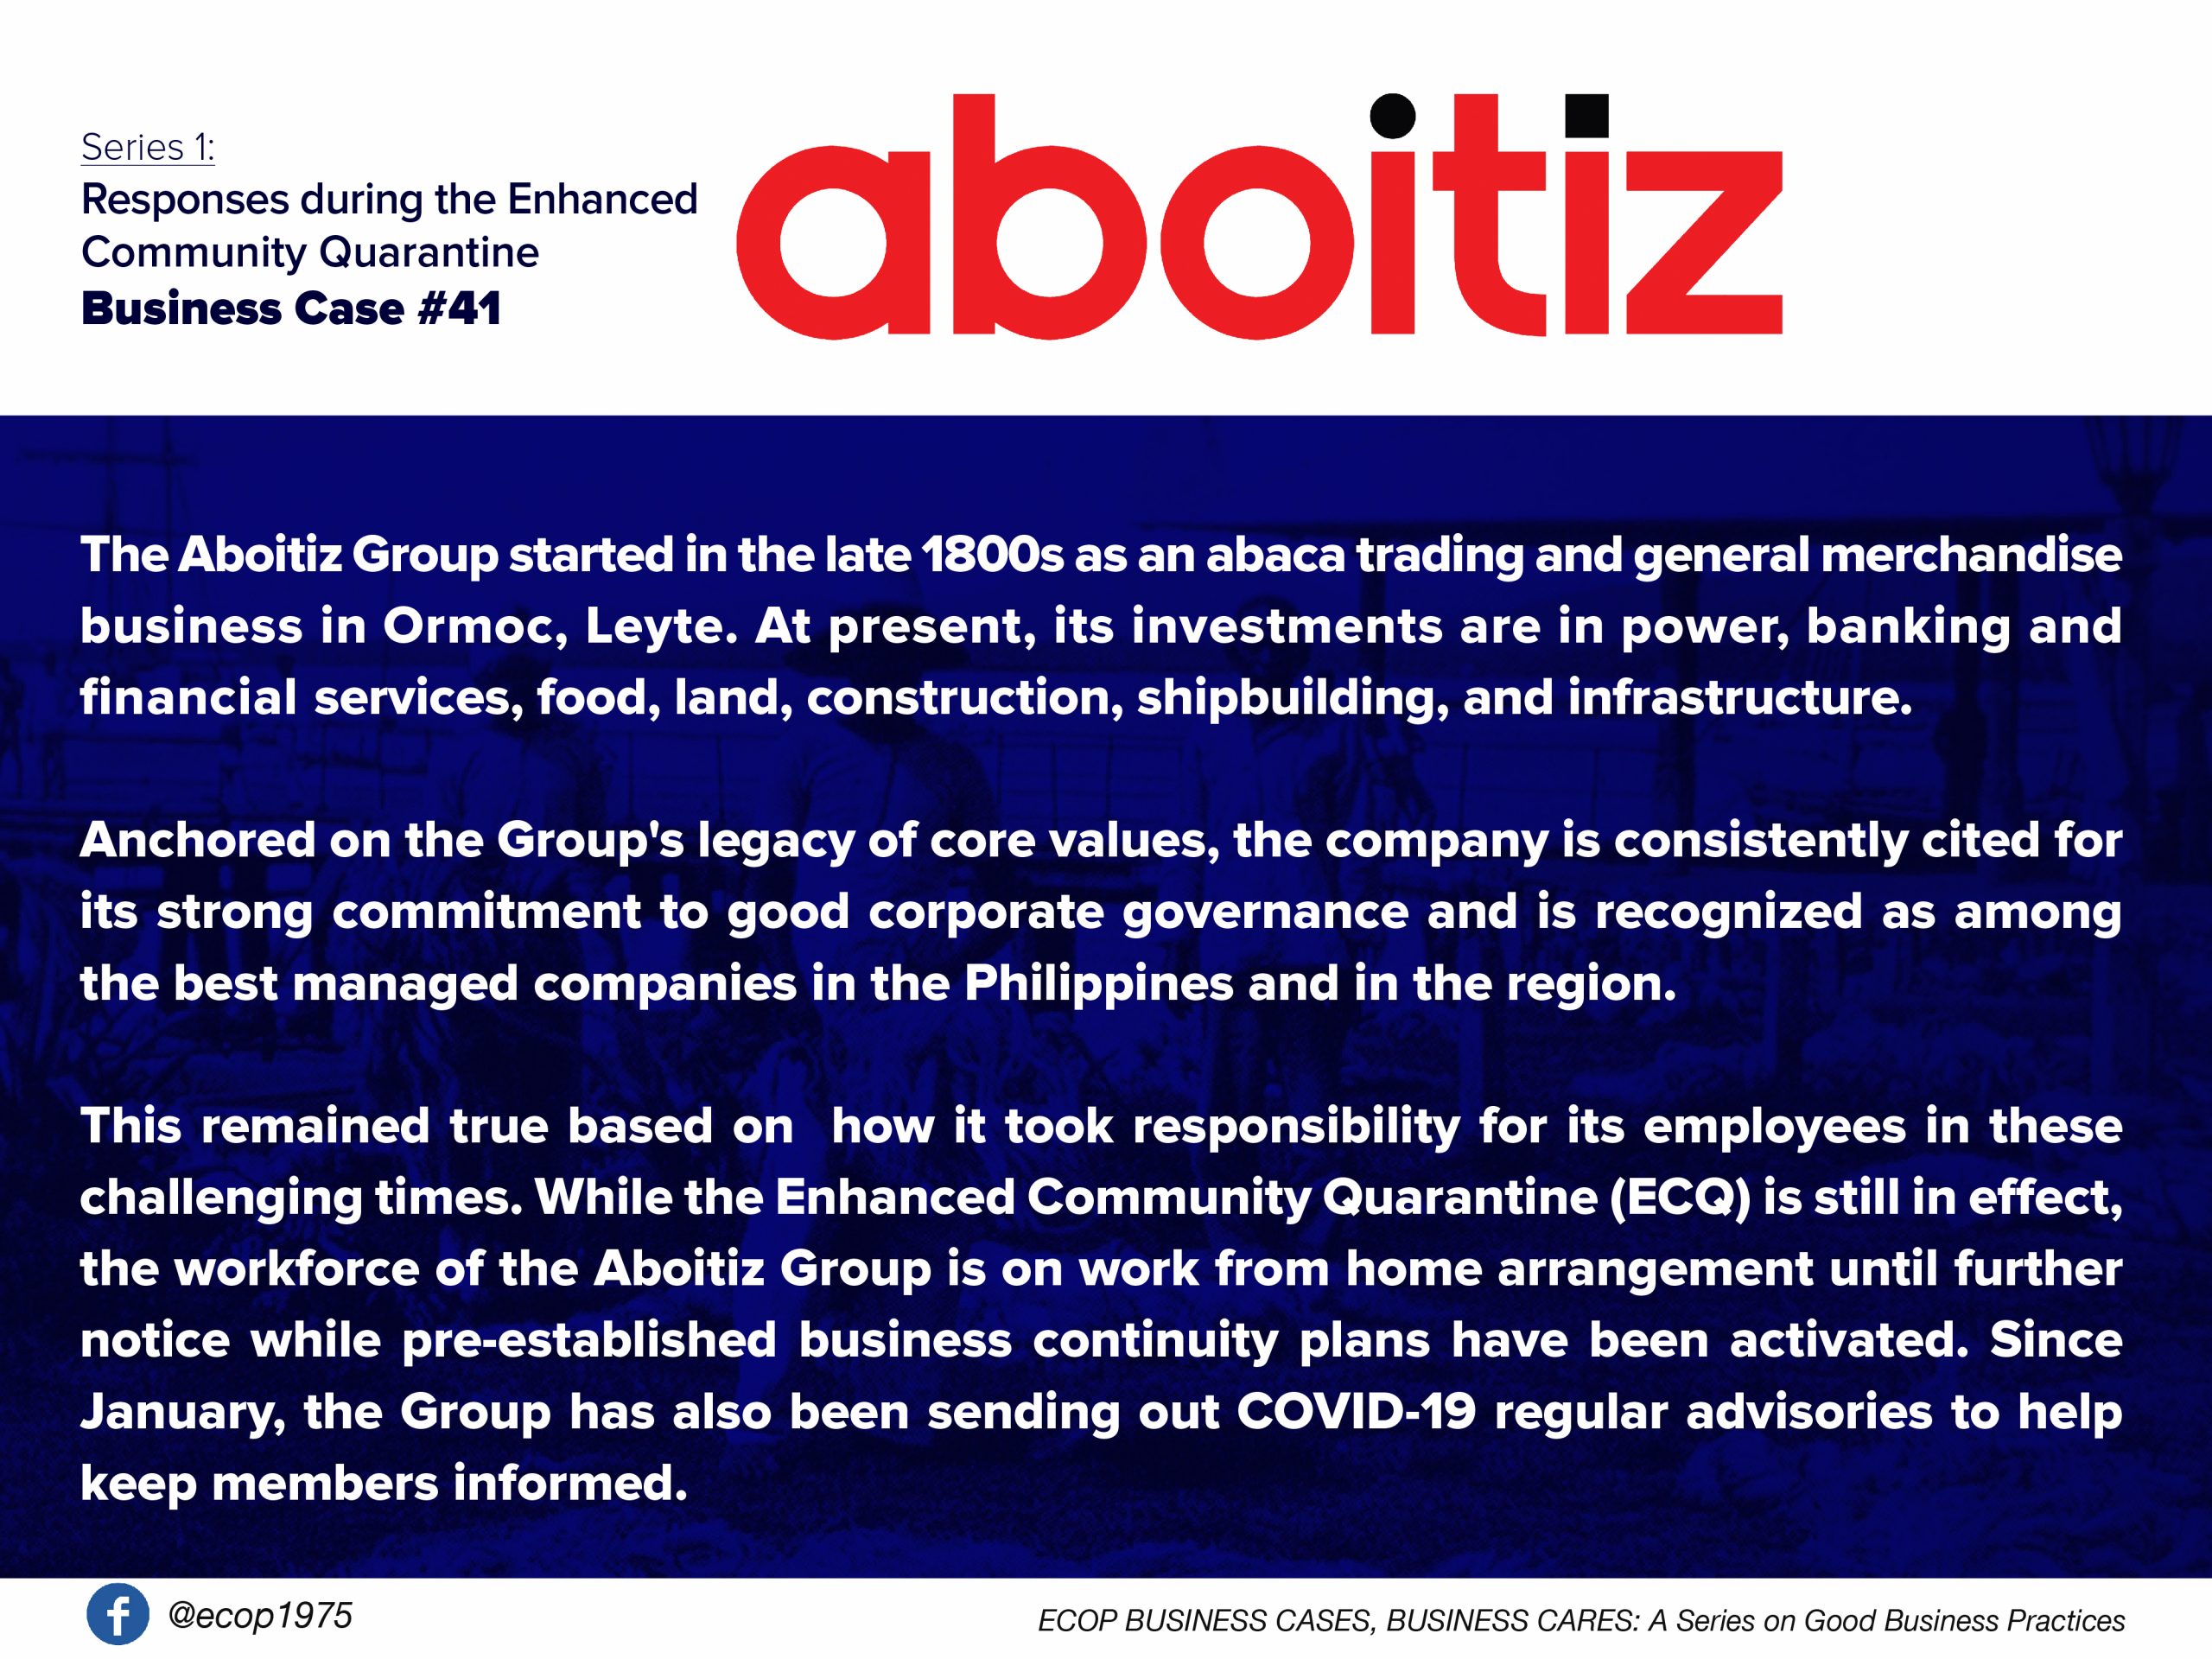 Best Practices of Aboitiz Group